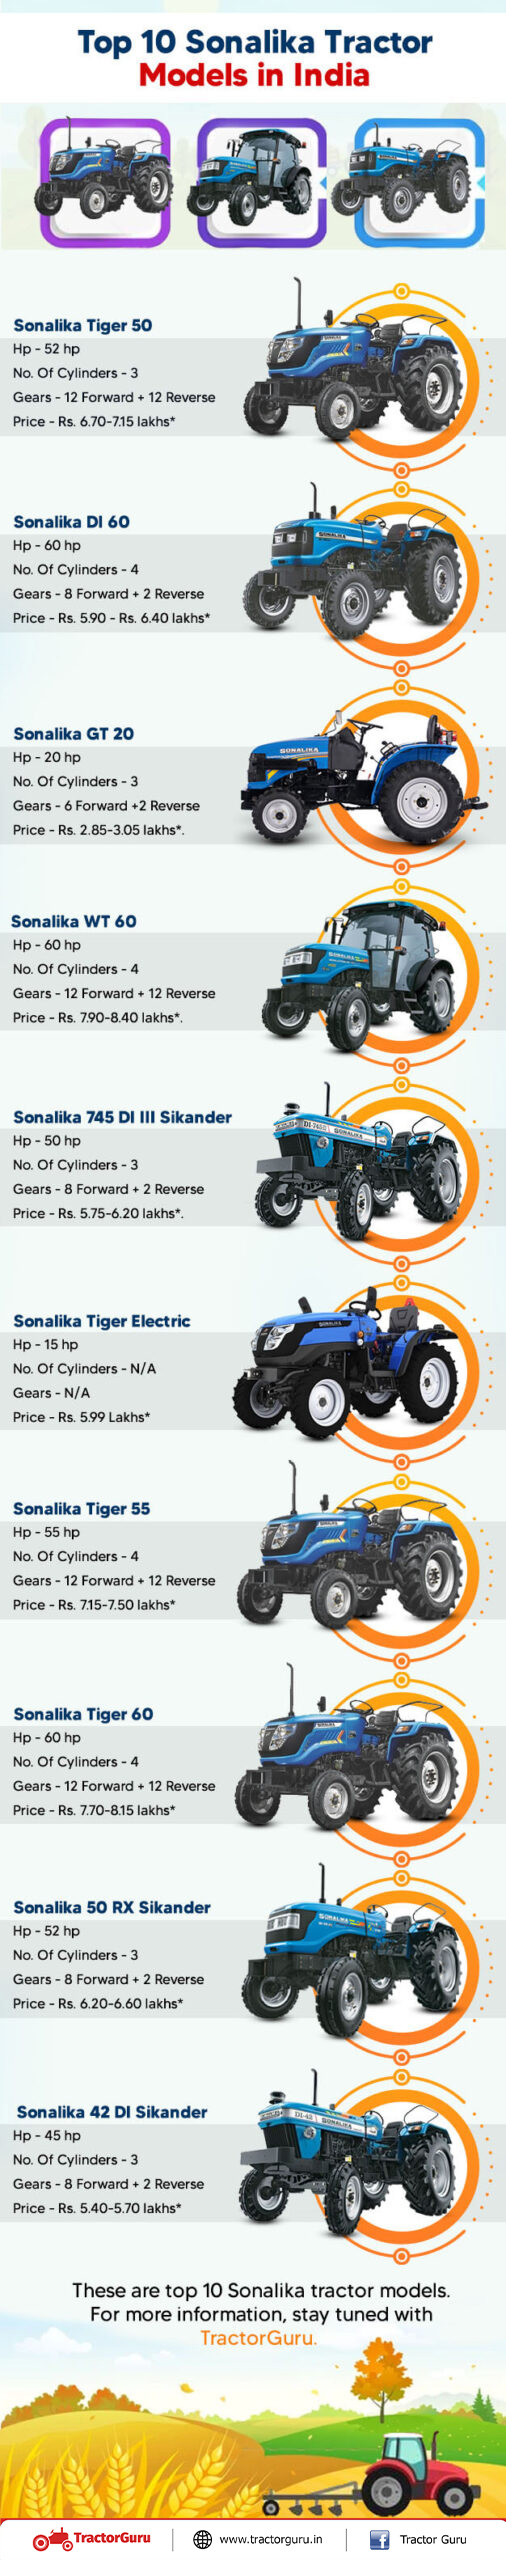 Top 10 Sonalika Tractor Models